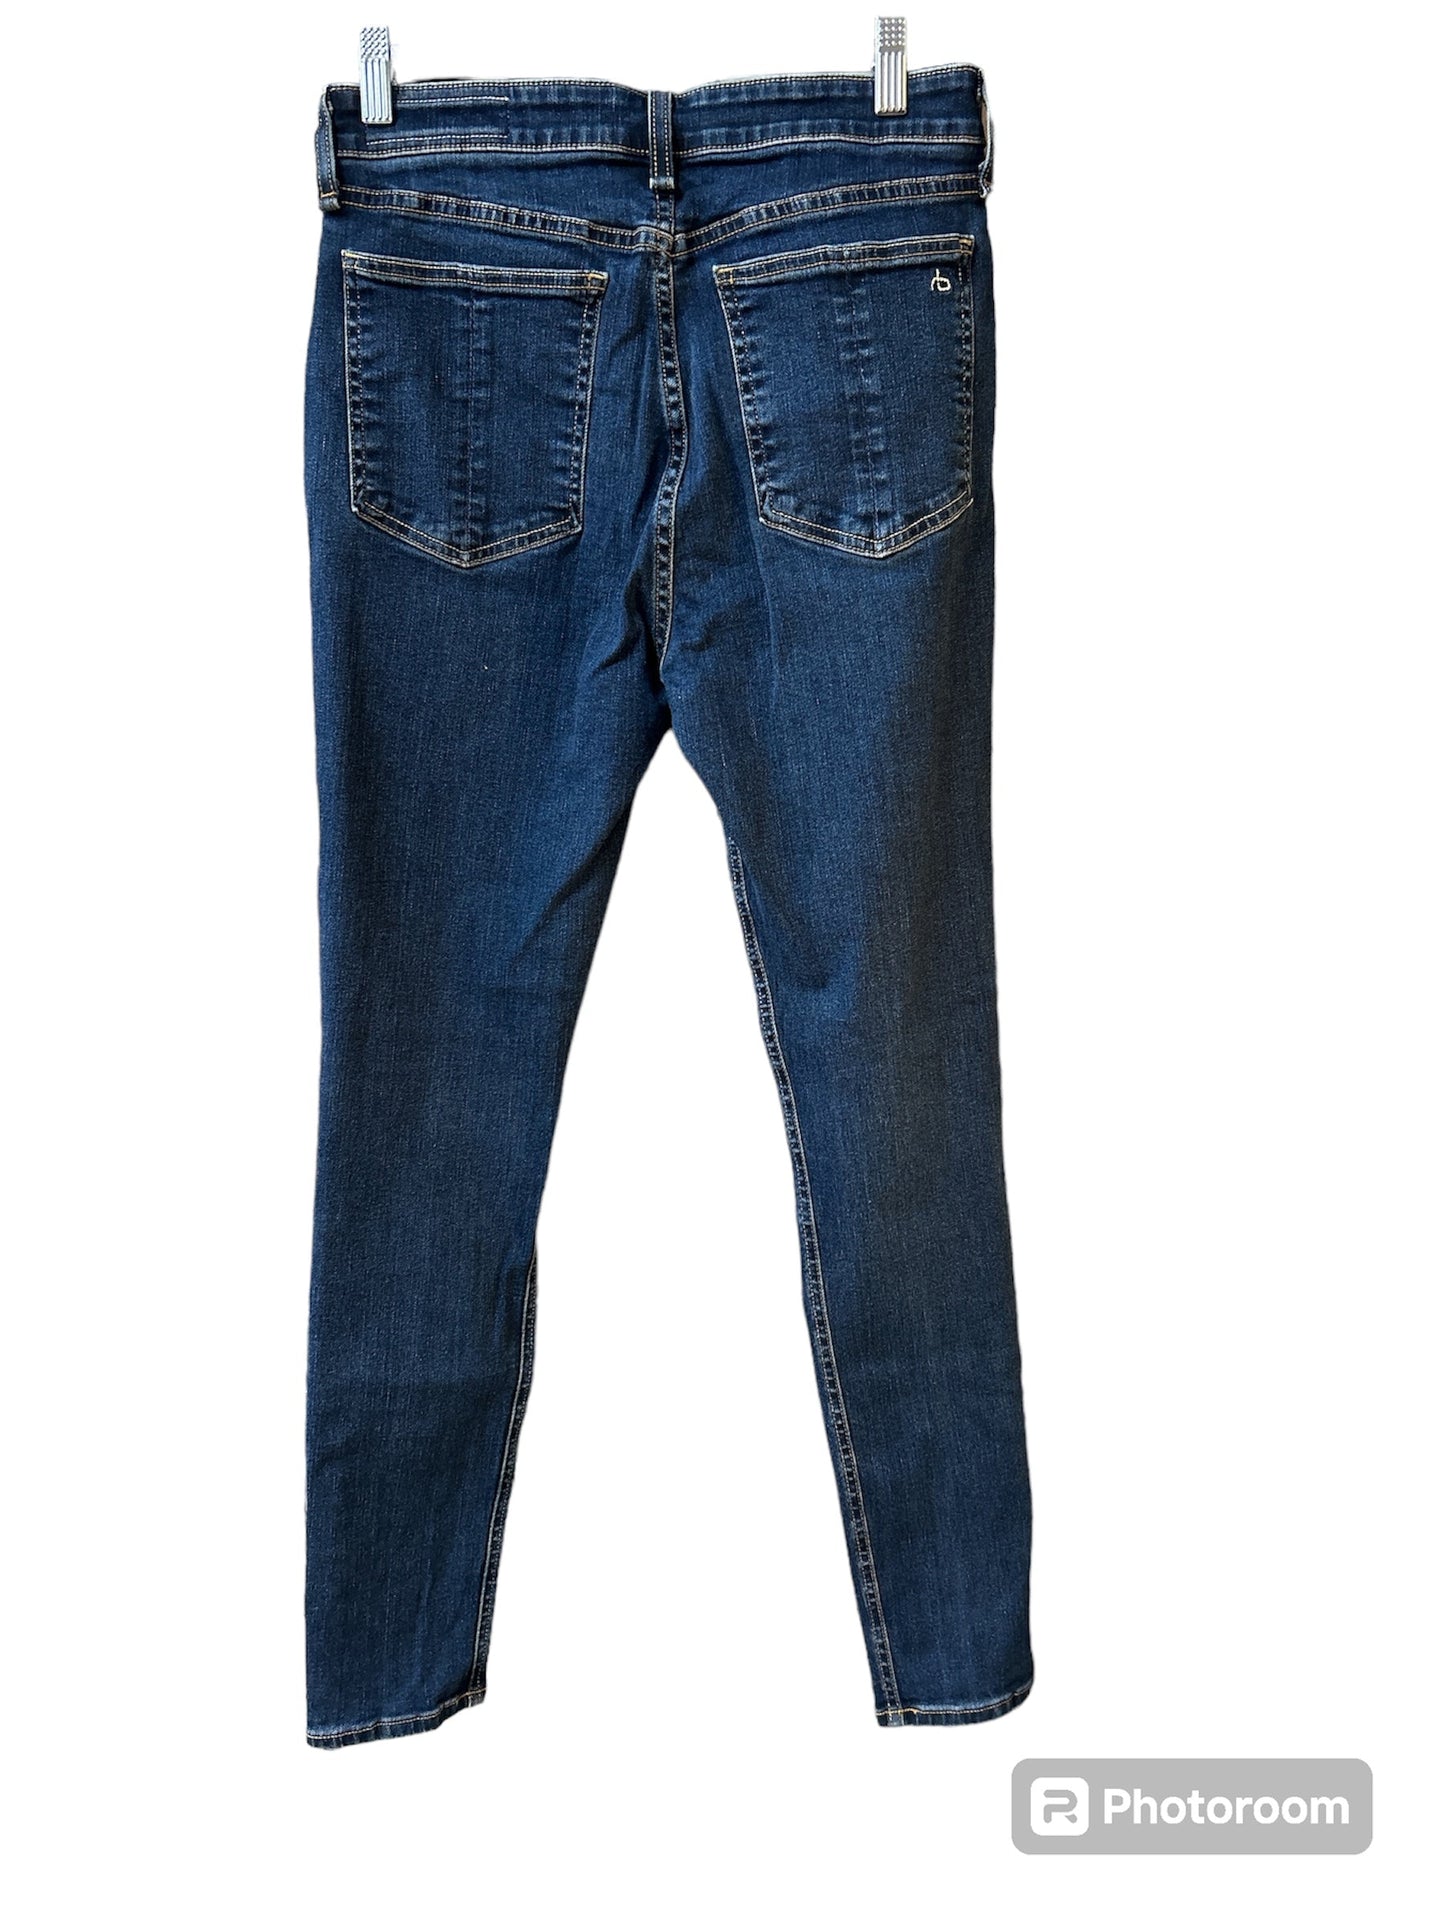 Blue Denim Jeans Designer Rag And Bone, Size 29